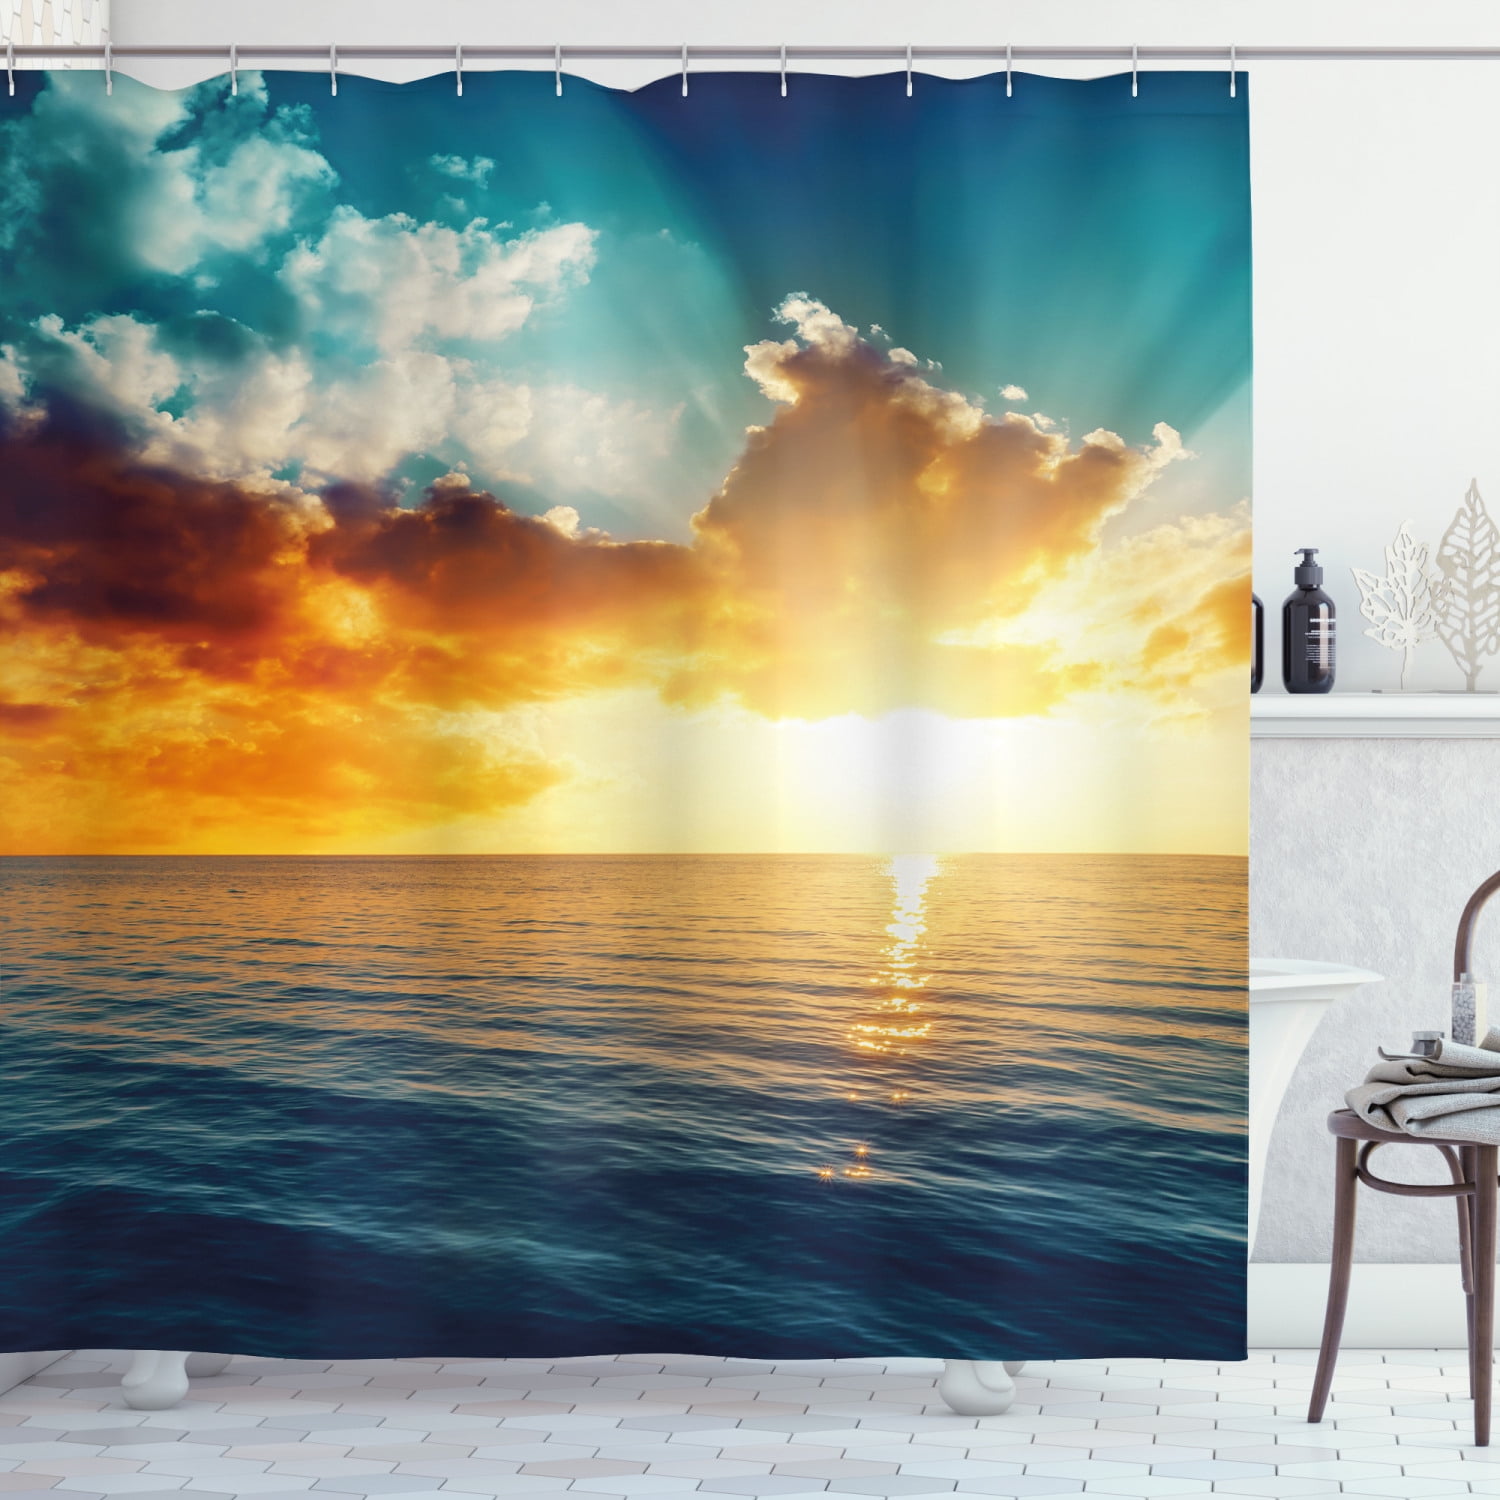 Sunset Sea Wave Beach Shower Curtain Sets Bathroom Waterproof Fabric & 12hooks 